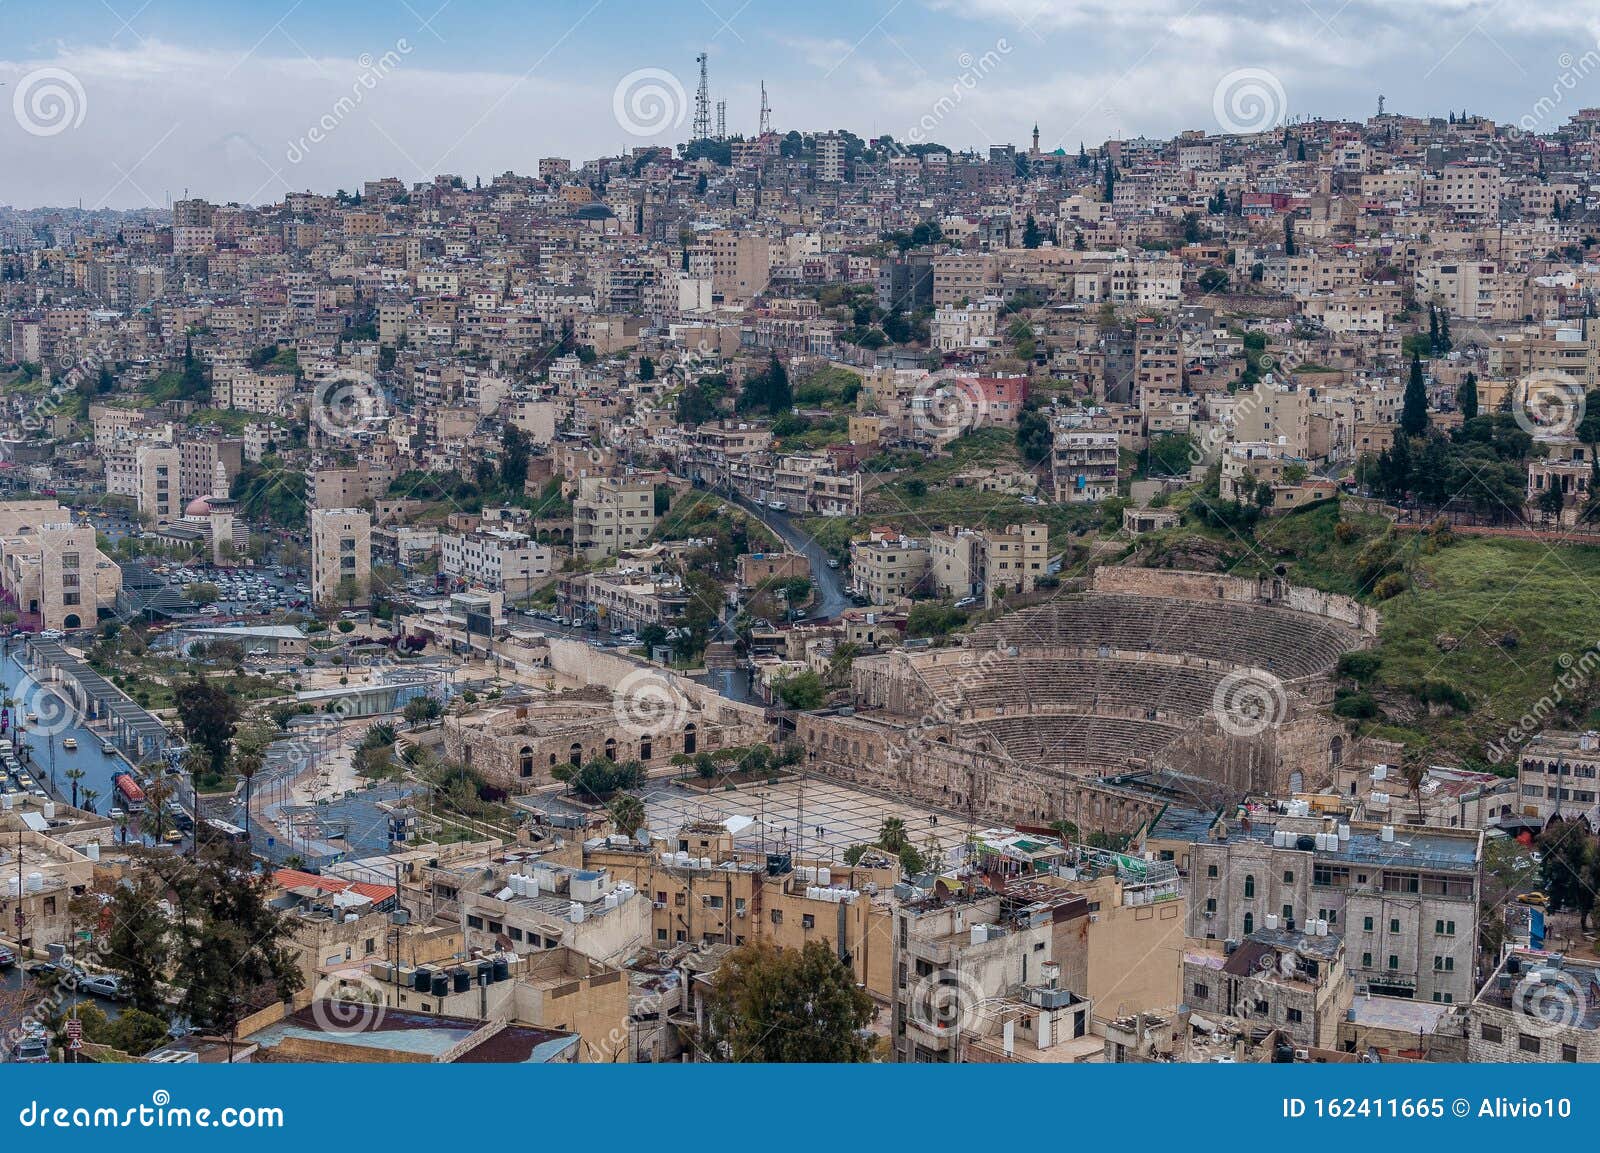 City Center of Amman, Capital Jordan Editorial Image - Image of ancient, 162411665